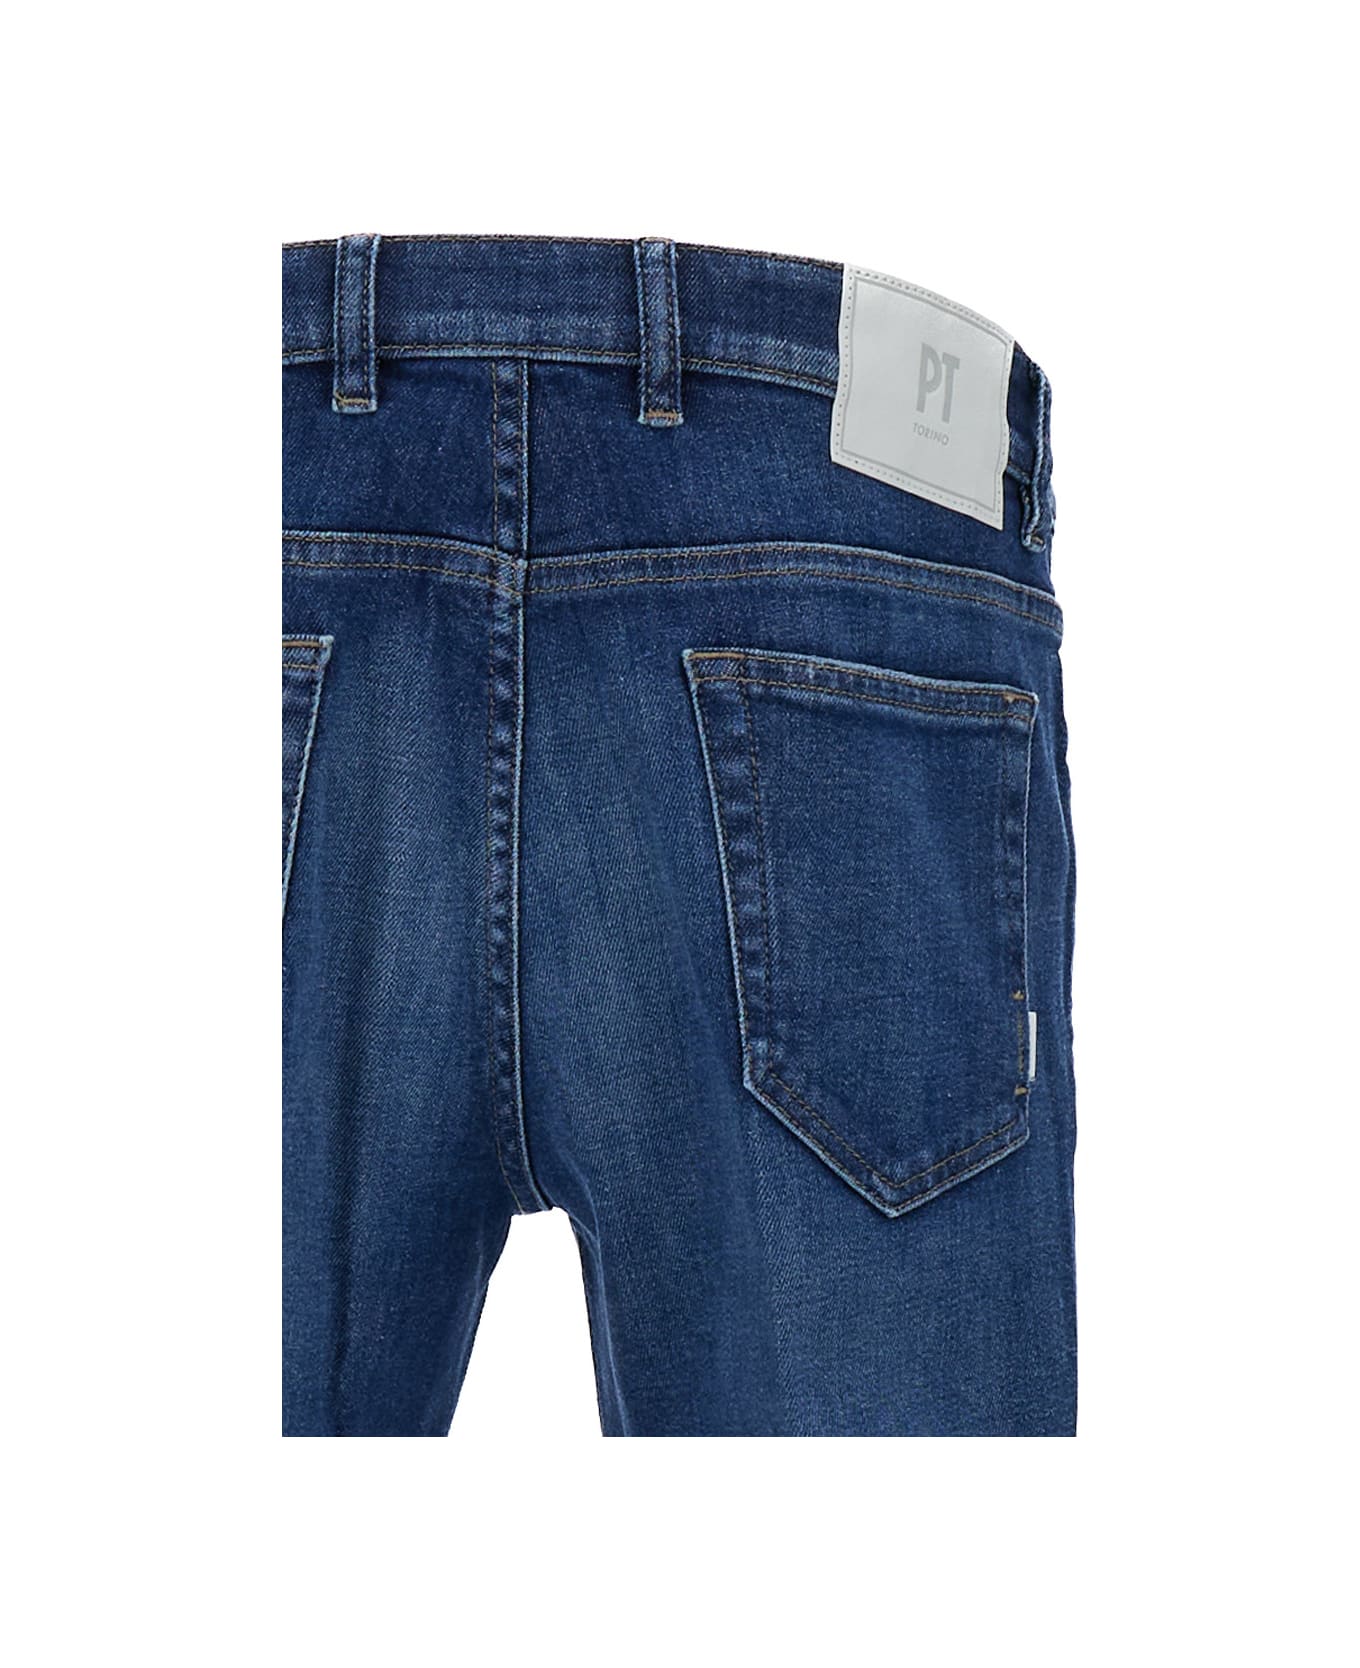 PT01 Blue Medium Waisted Jeans In Cotton Blend Man - Blu デニム